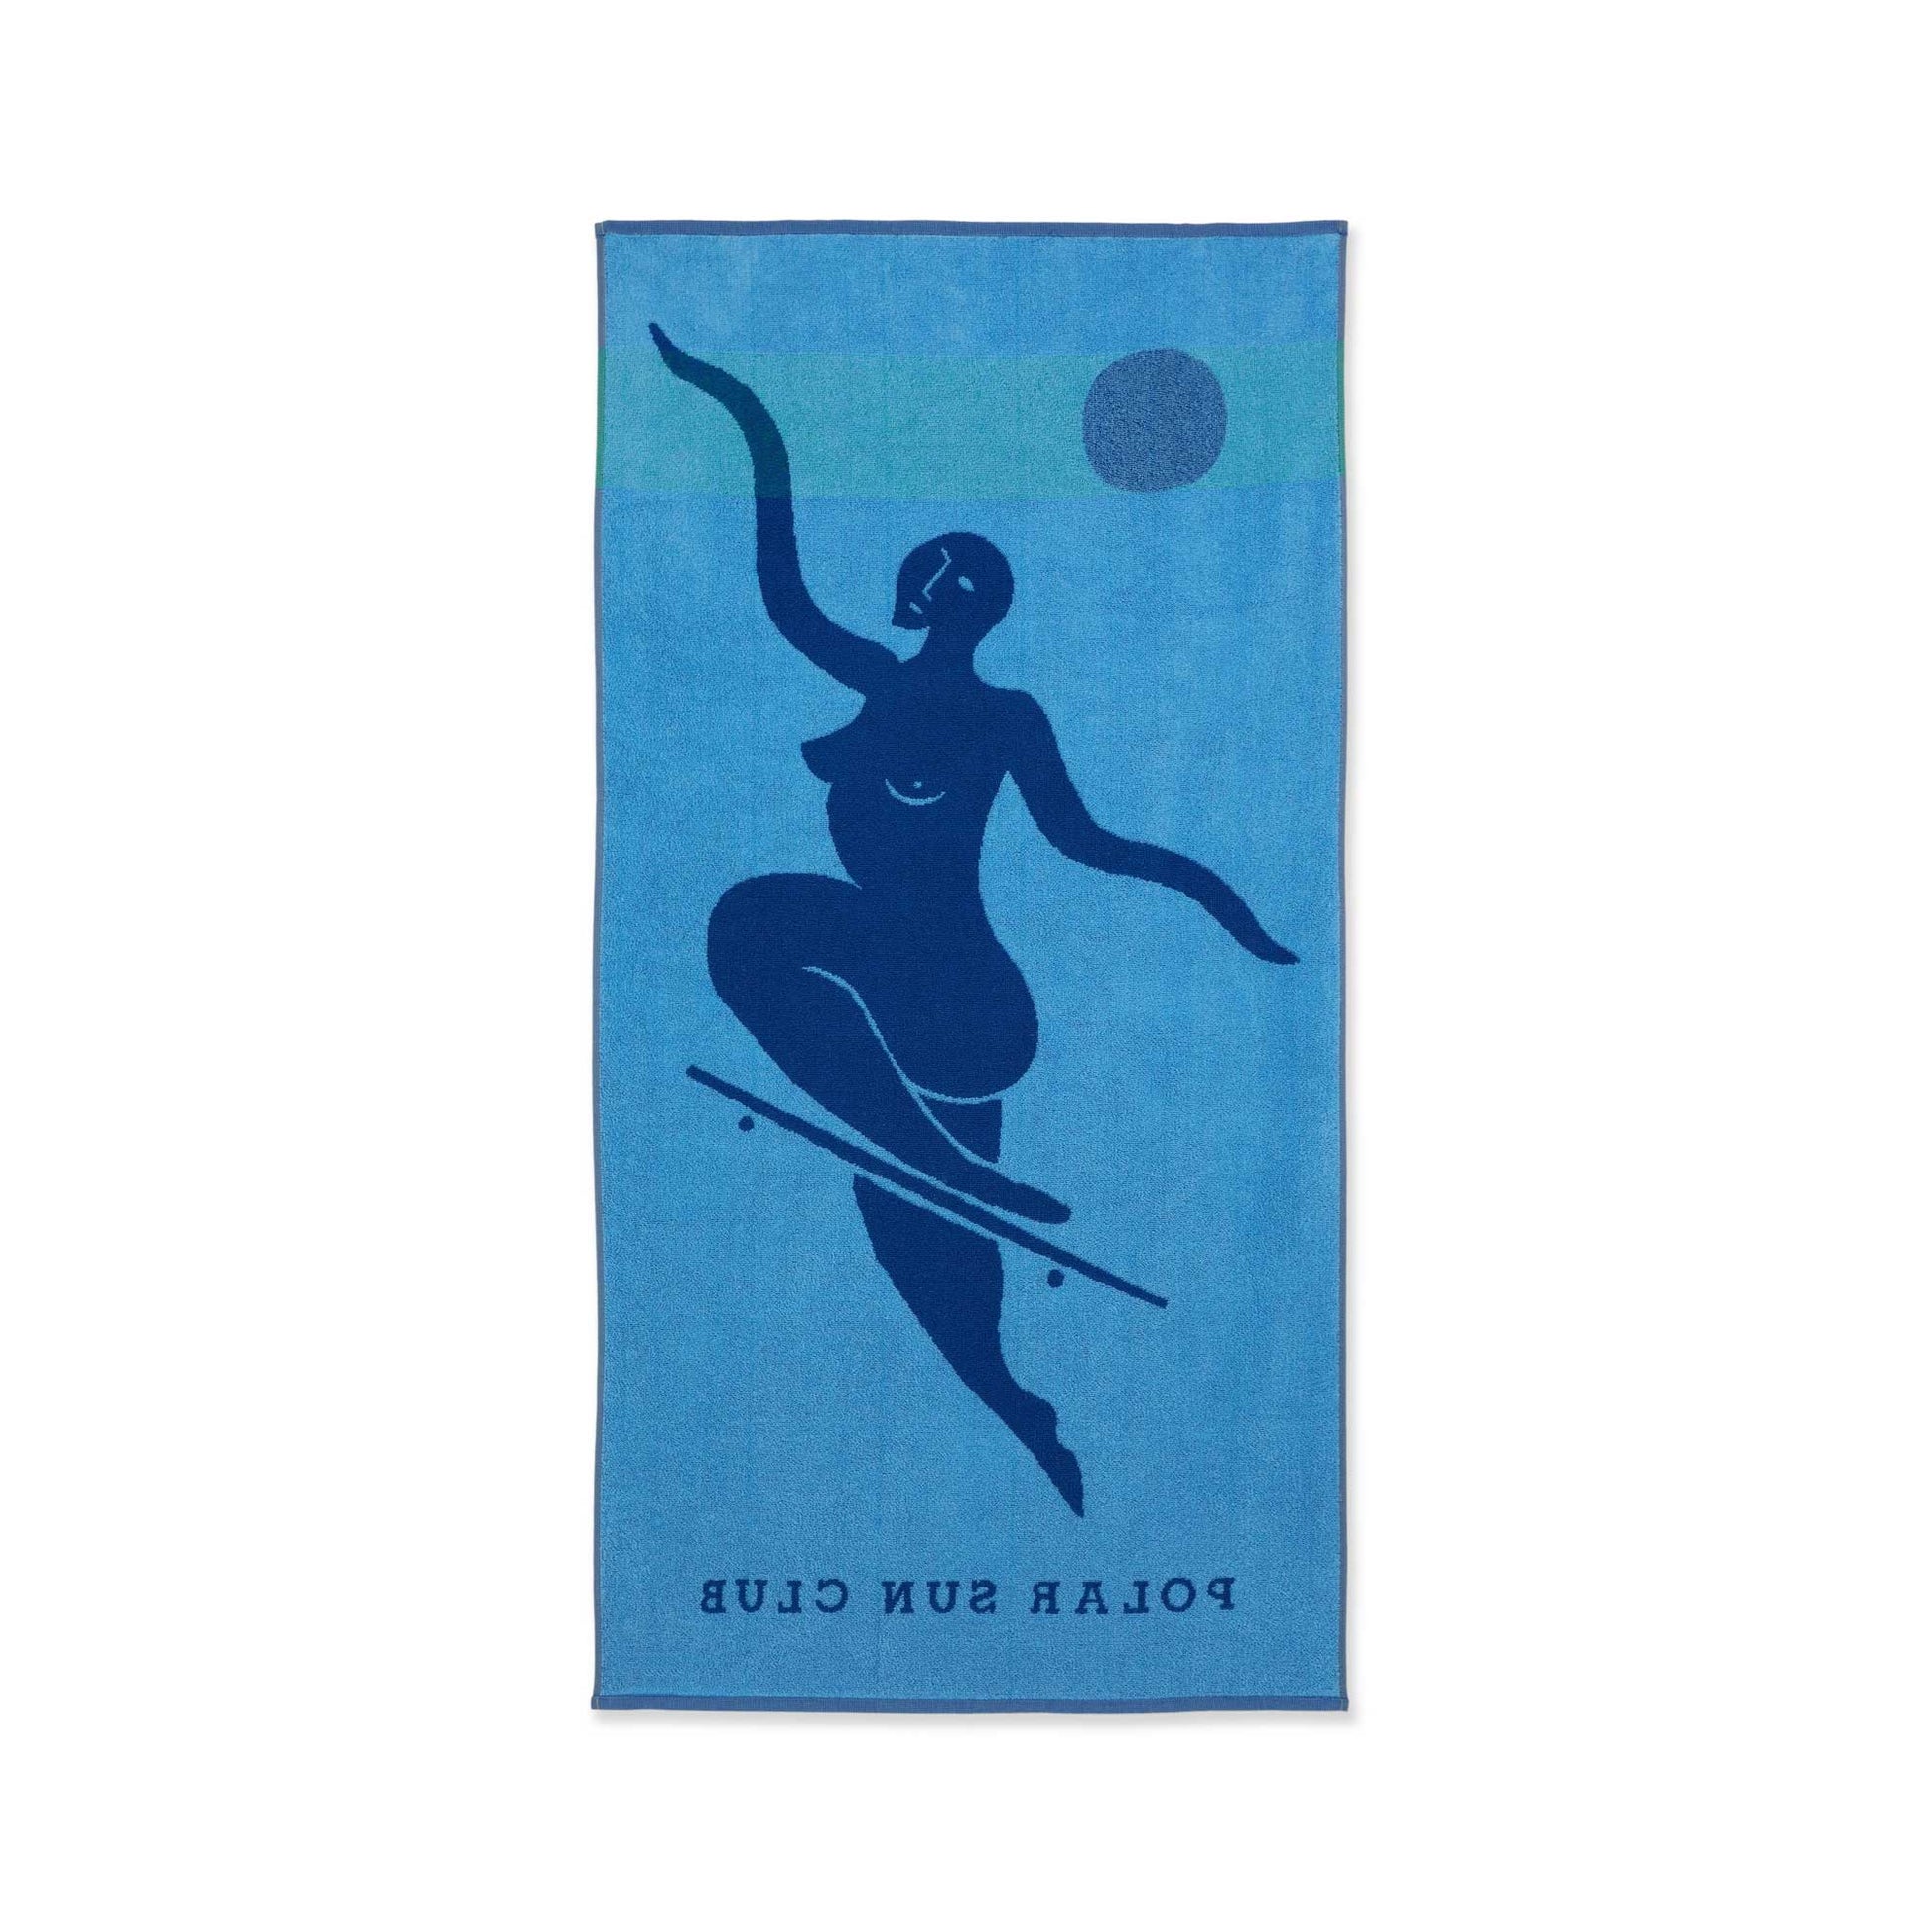 Polar No Complies Forever Towel, egyptian blue - Tiki Room Skateboards - 2